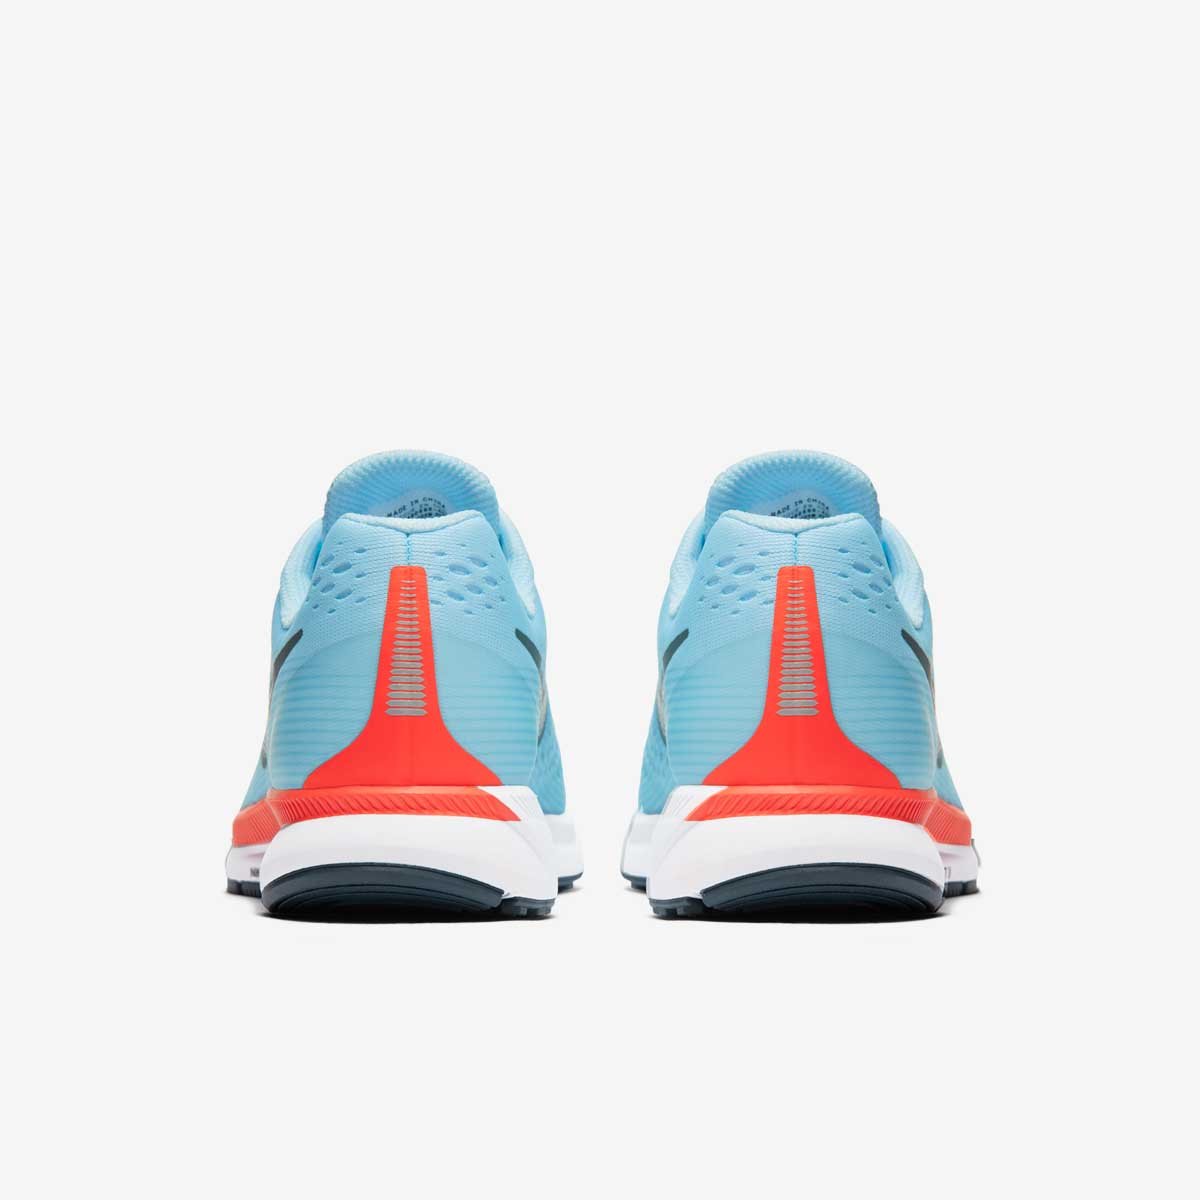 Кроссовки для бега Nike AIR ZOOM PEGASUS 34 